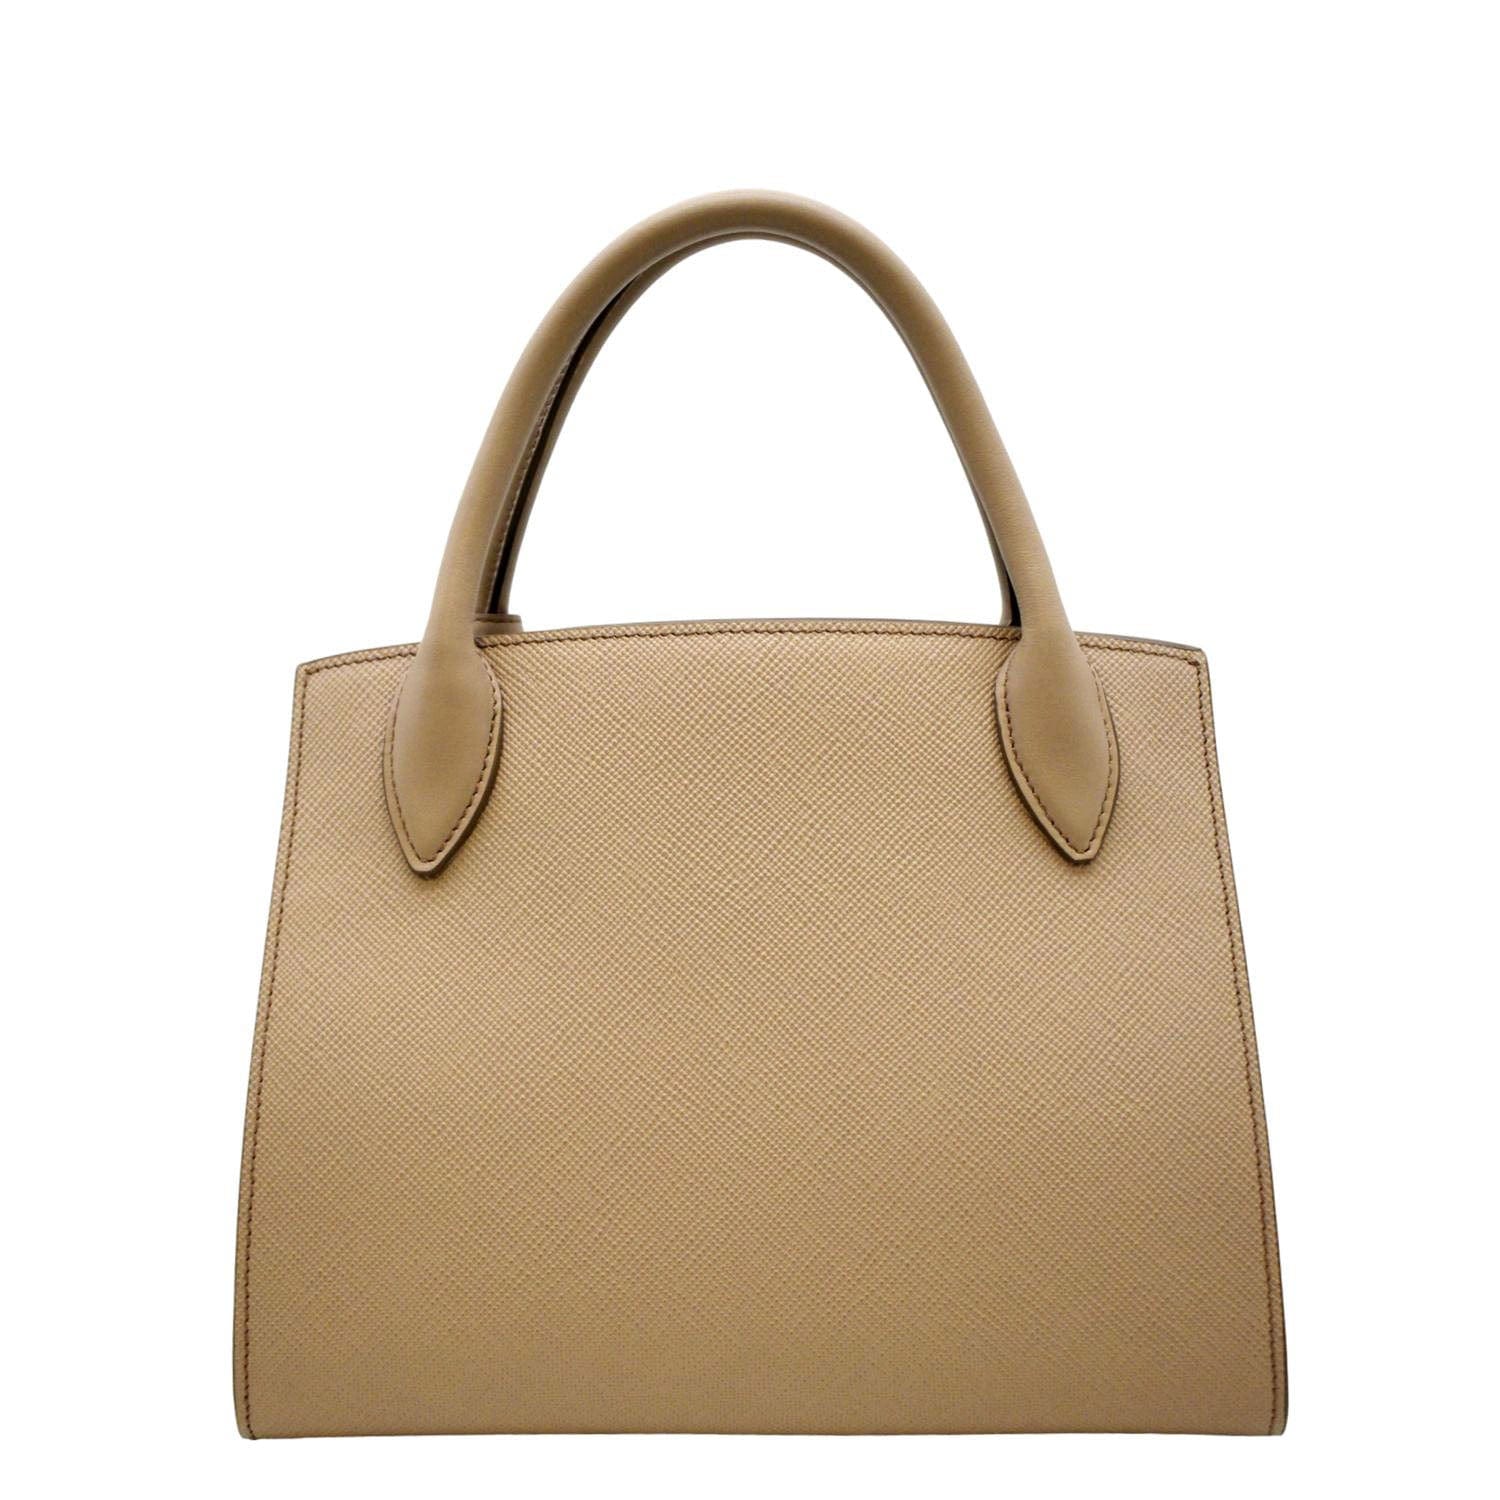 Prada Monochrome Saffiano Leather Bag